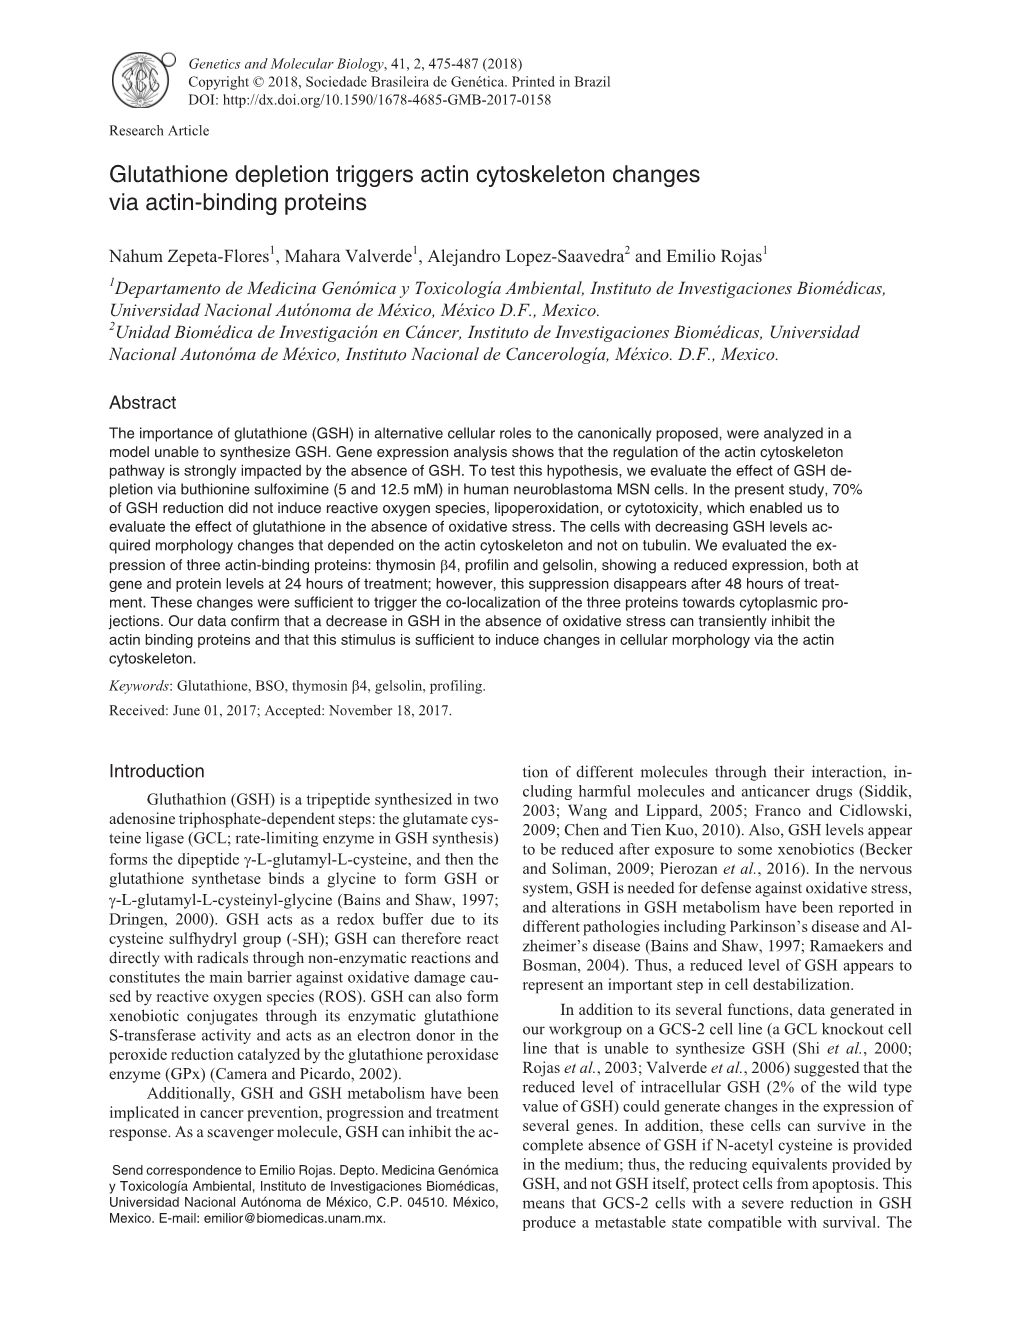 Glutathione Depletion Triggers Actin Cytoskeleton Changes Via Actin-Binding Proteins